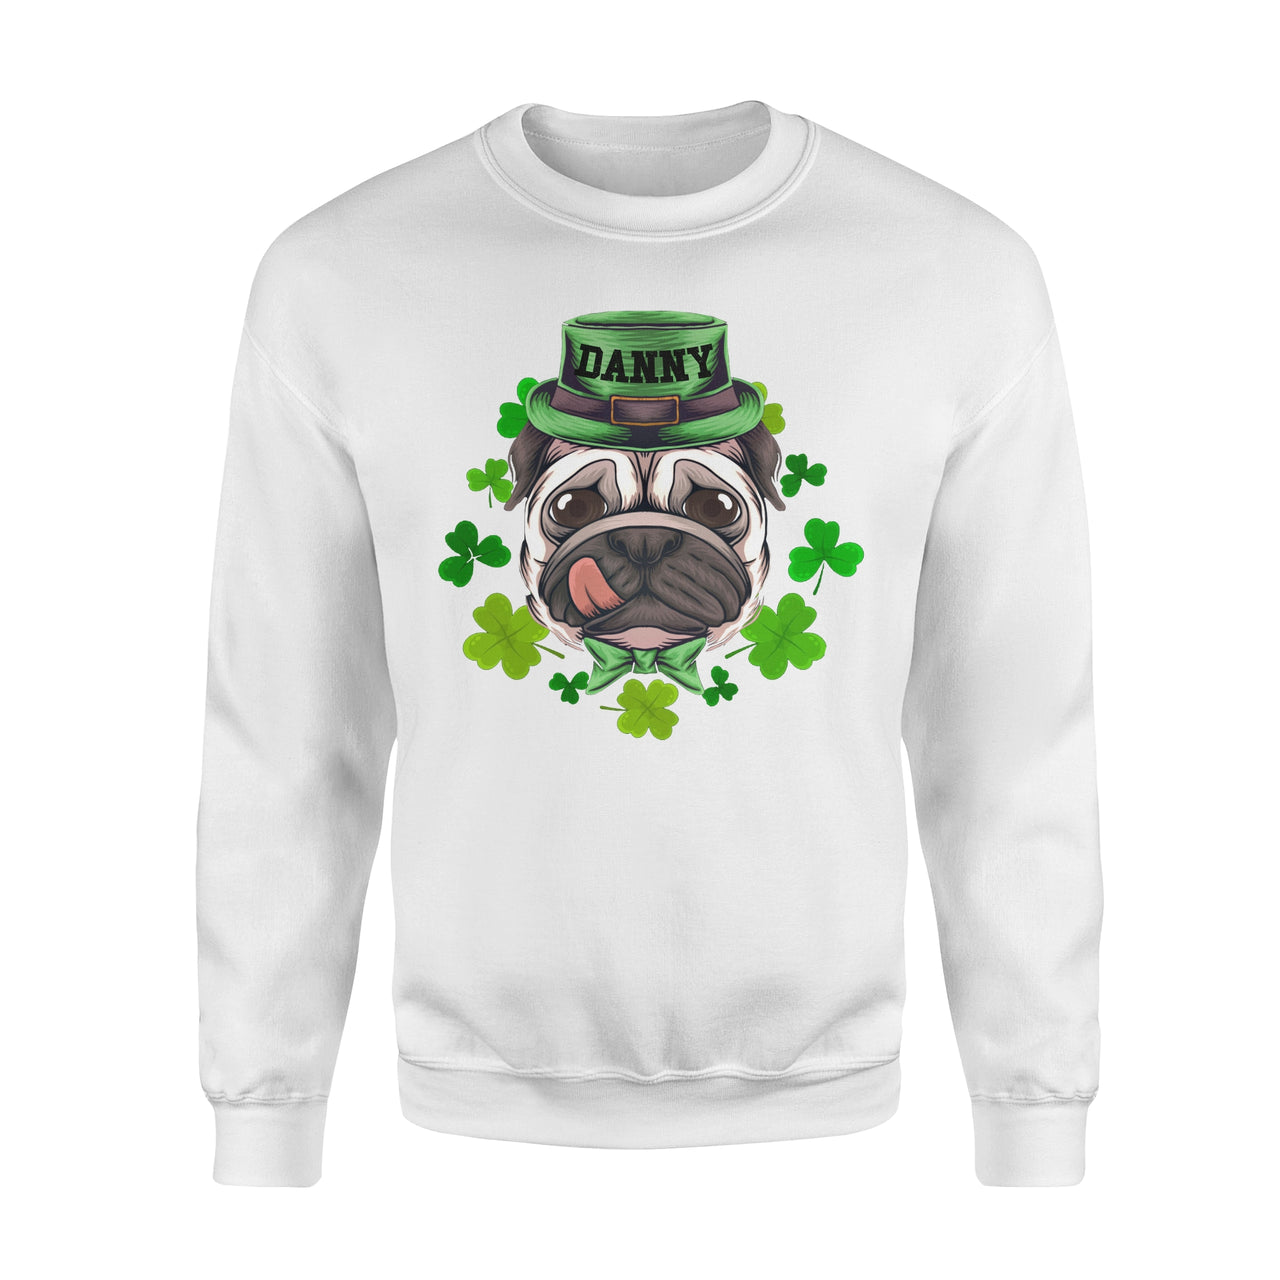 Personalized St. Patrick Gift Idea - Portrait Bulldog With Clover - Standard Crew Neck Sweatshirt